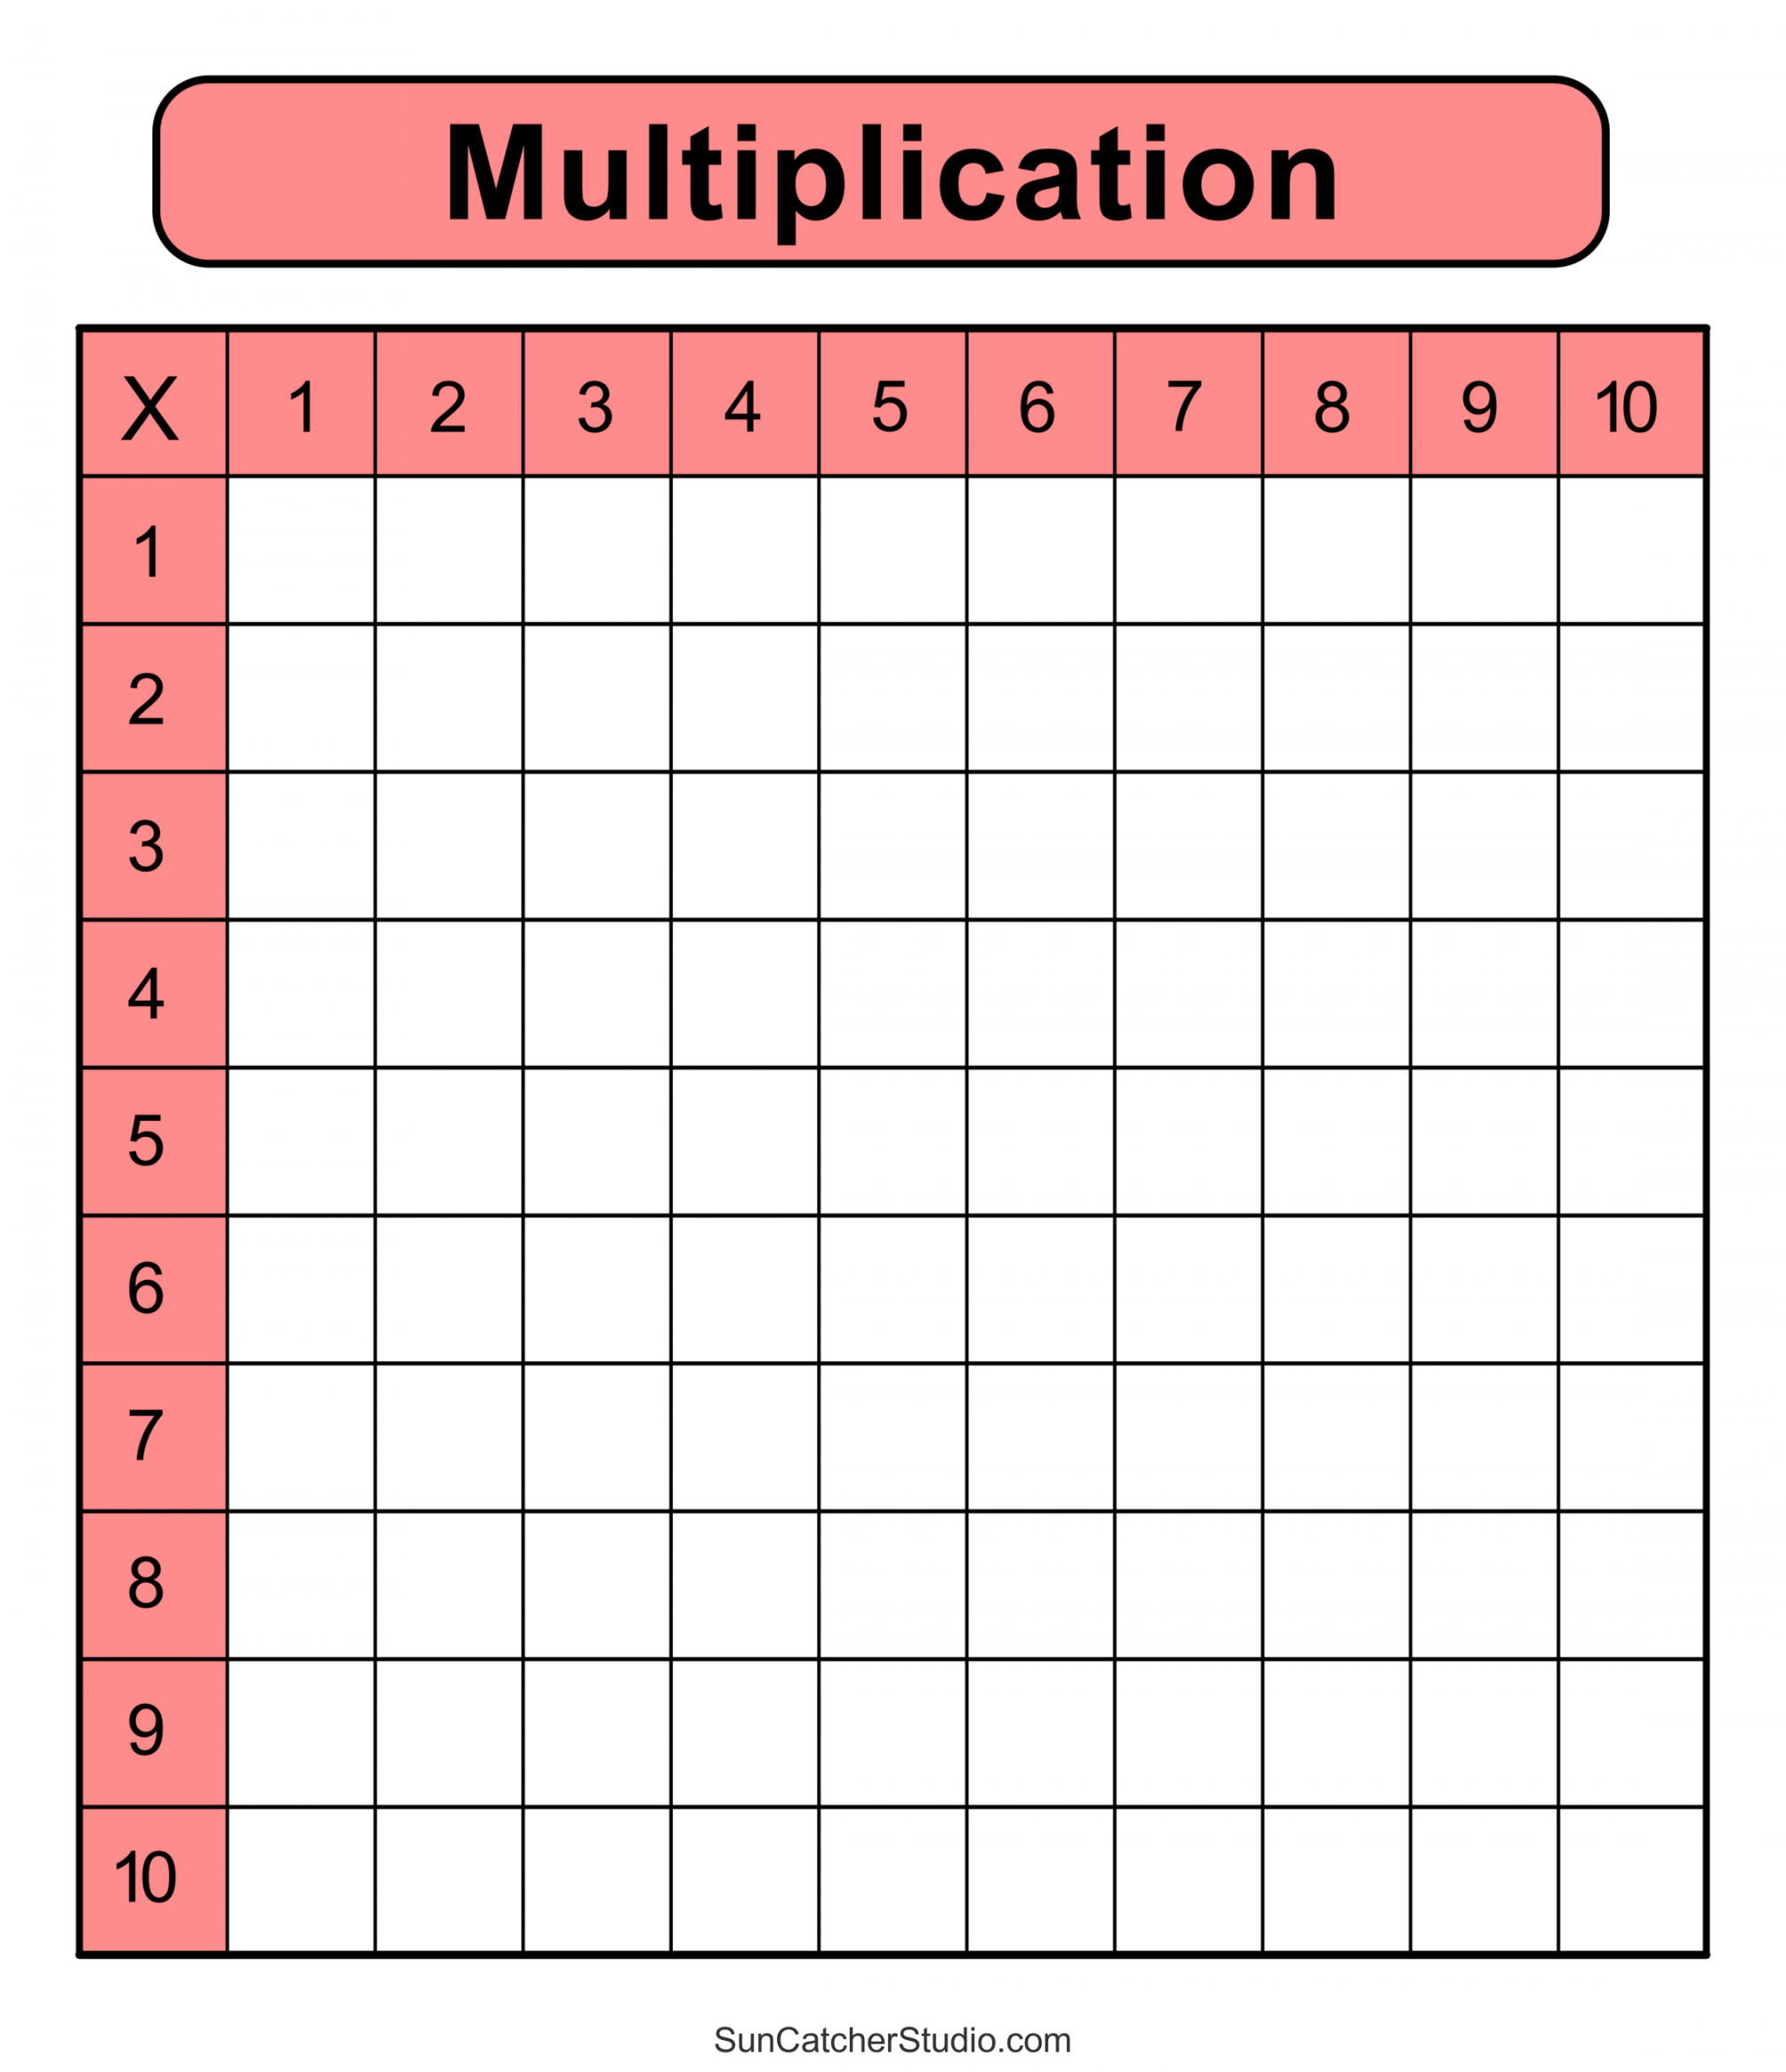 Multiplication Charts (PDF): Free Printable Times Tables – DIY  - FREE Printables - Blank Multiplication Table